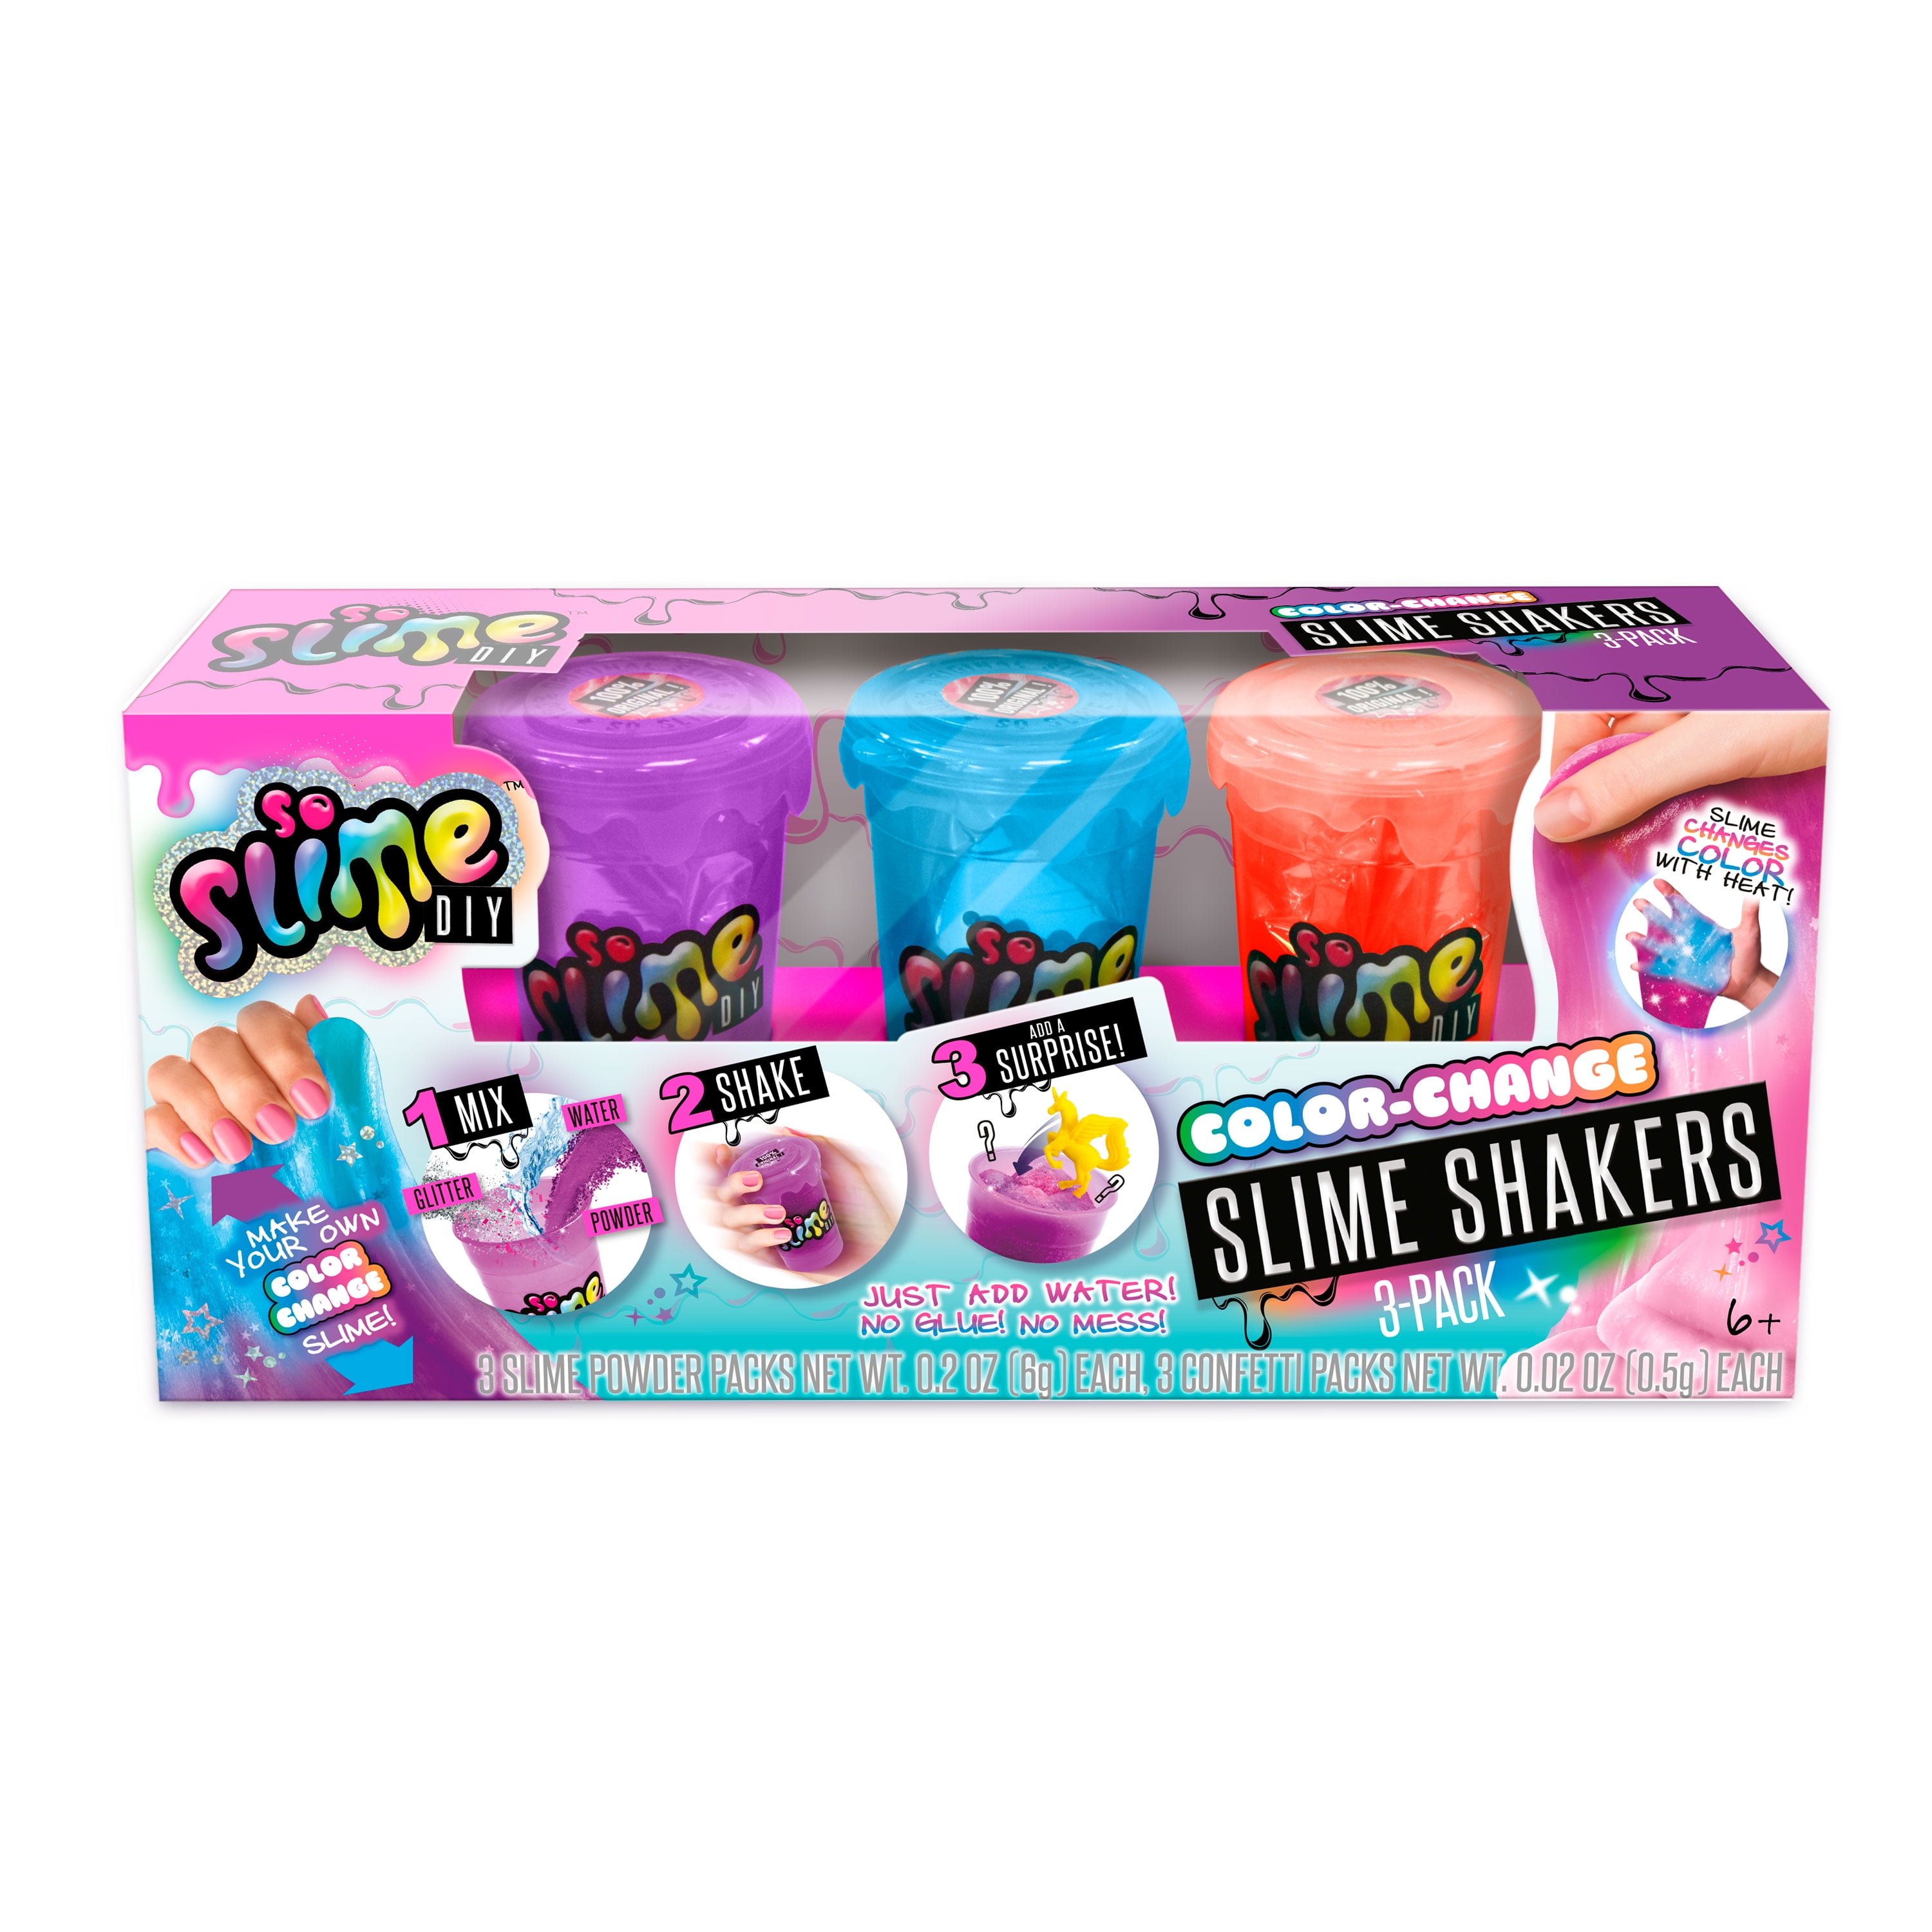 Slime shakers x 3